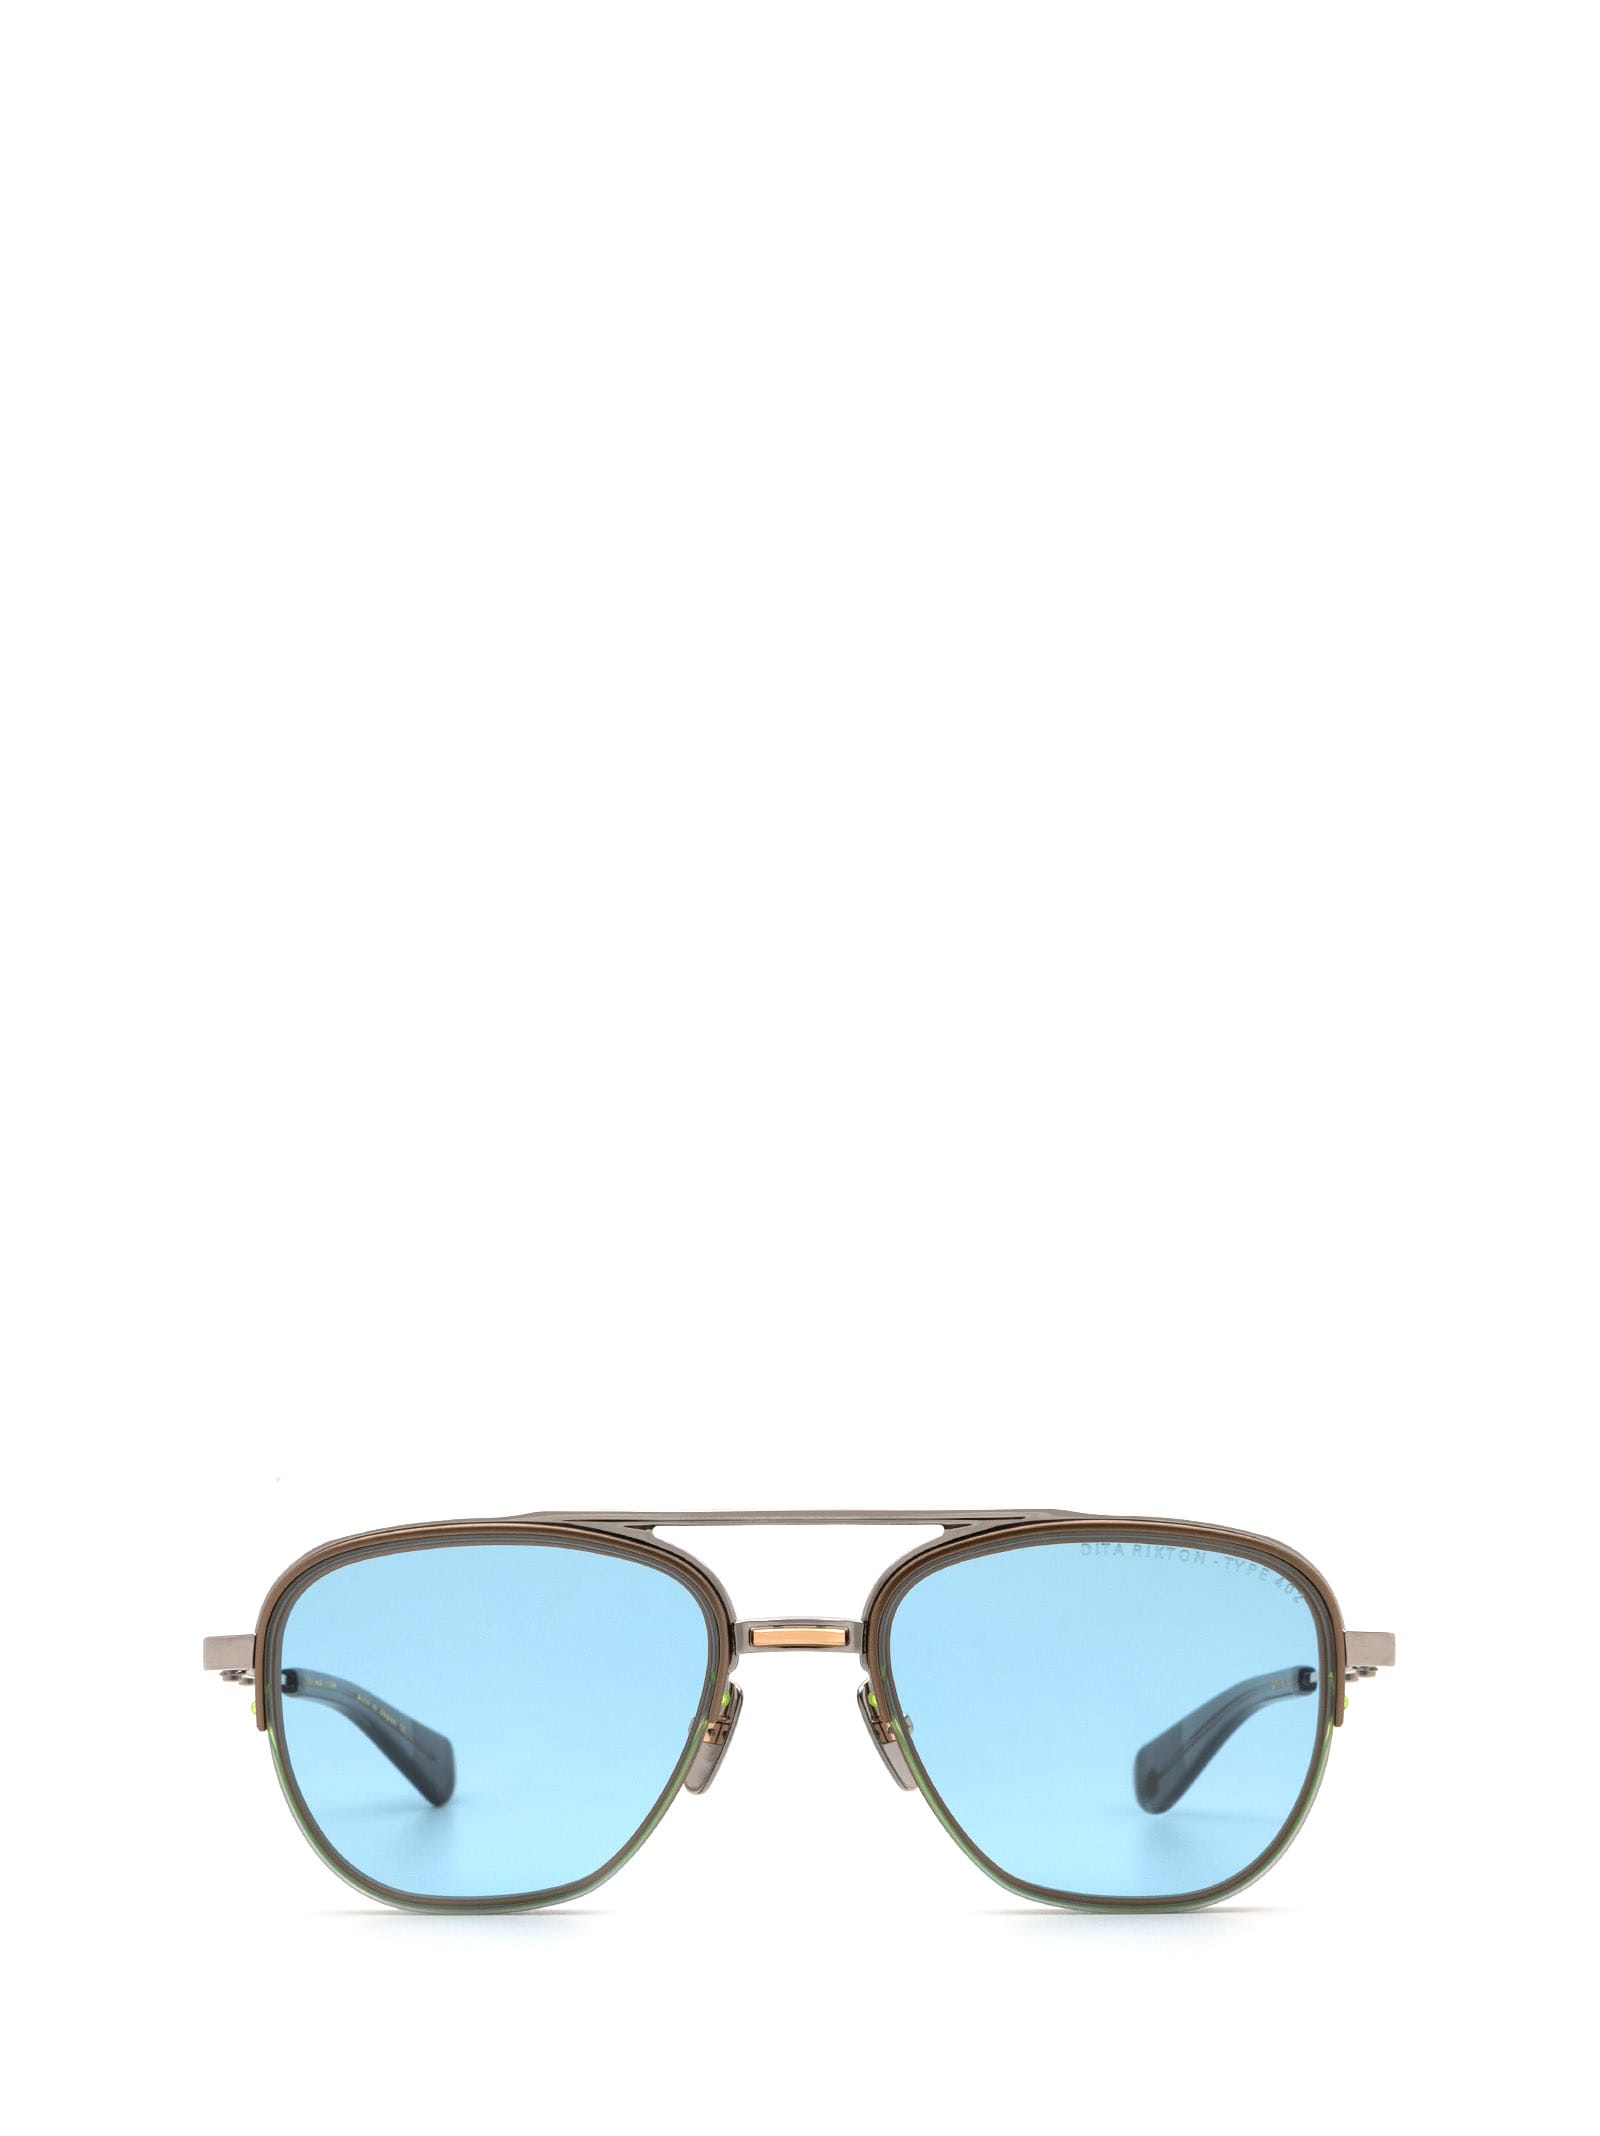 Dita Dts117-54-02 Palladium Grey Sunglasses